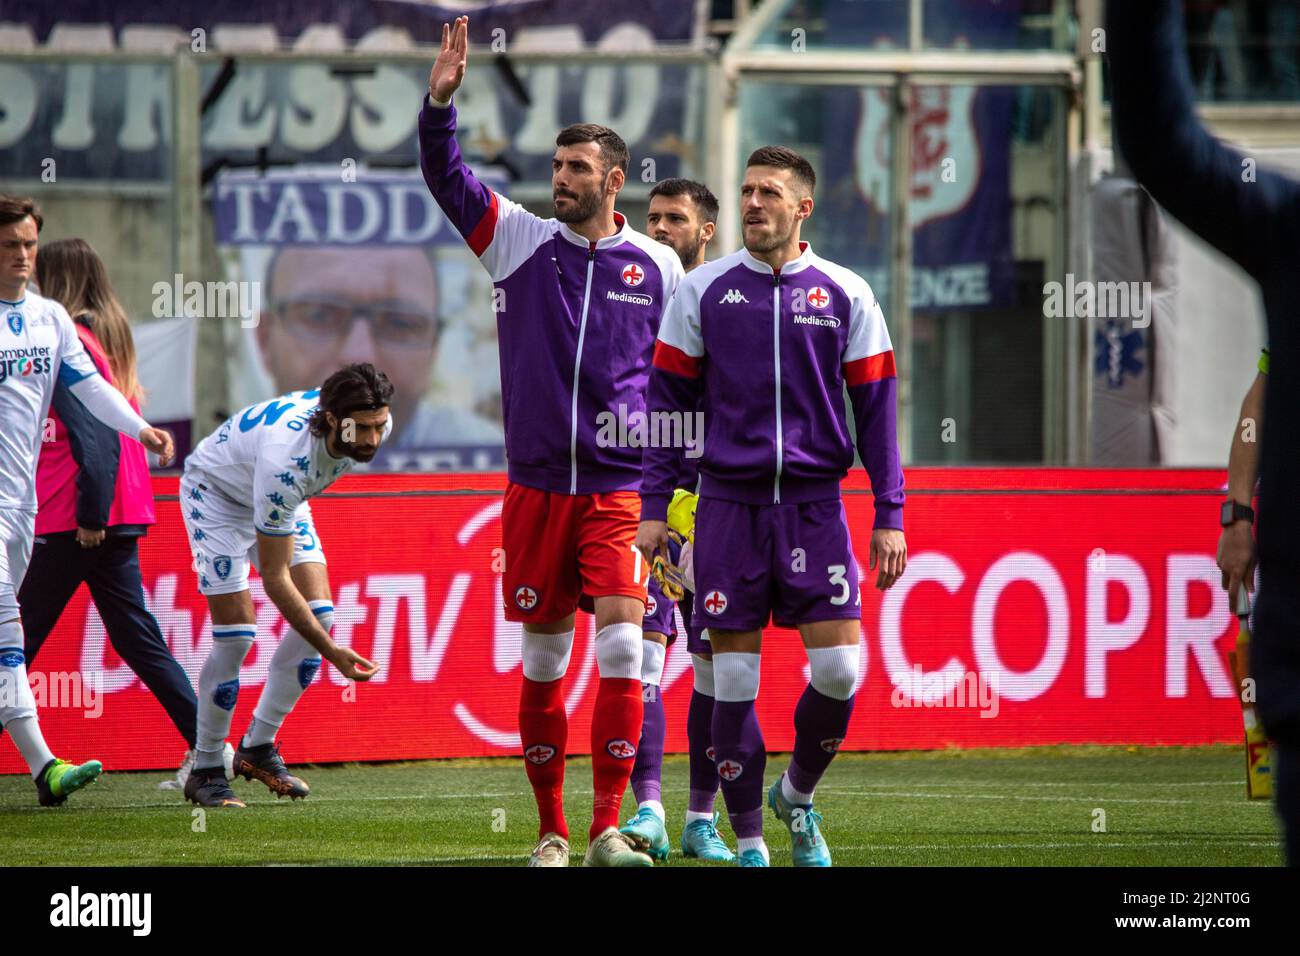 Watch ACF Fiorentina vs. Empoli FC Online: Live Stream, Start Time